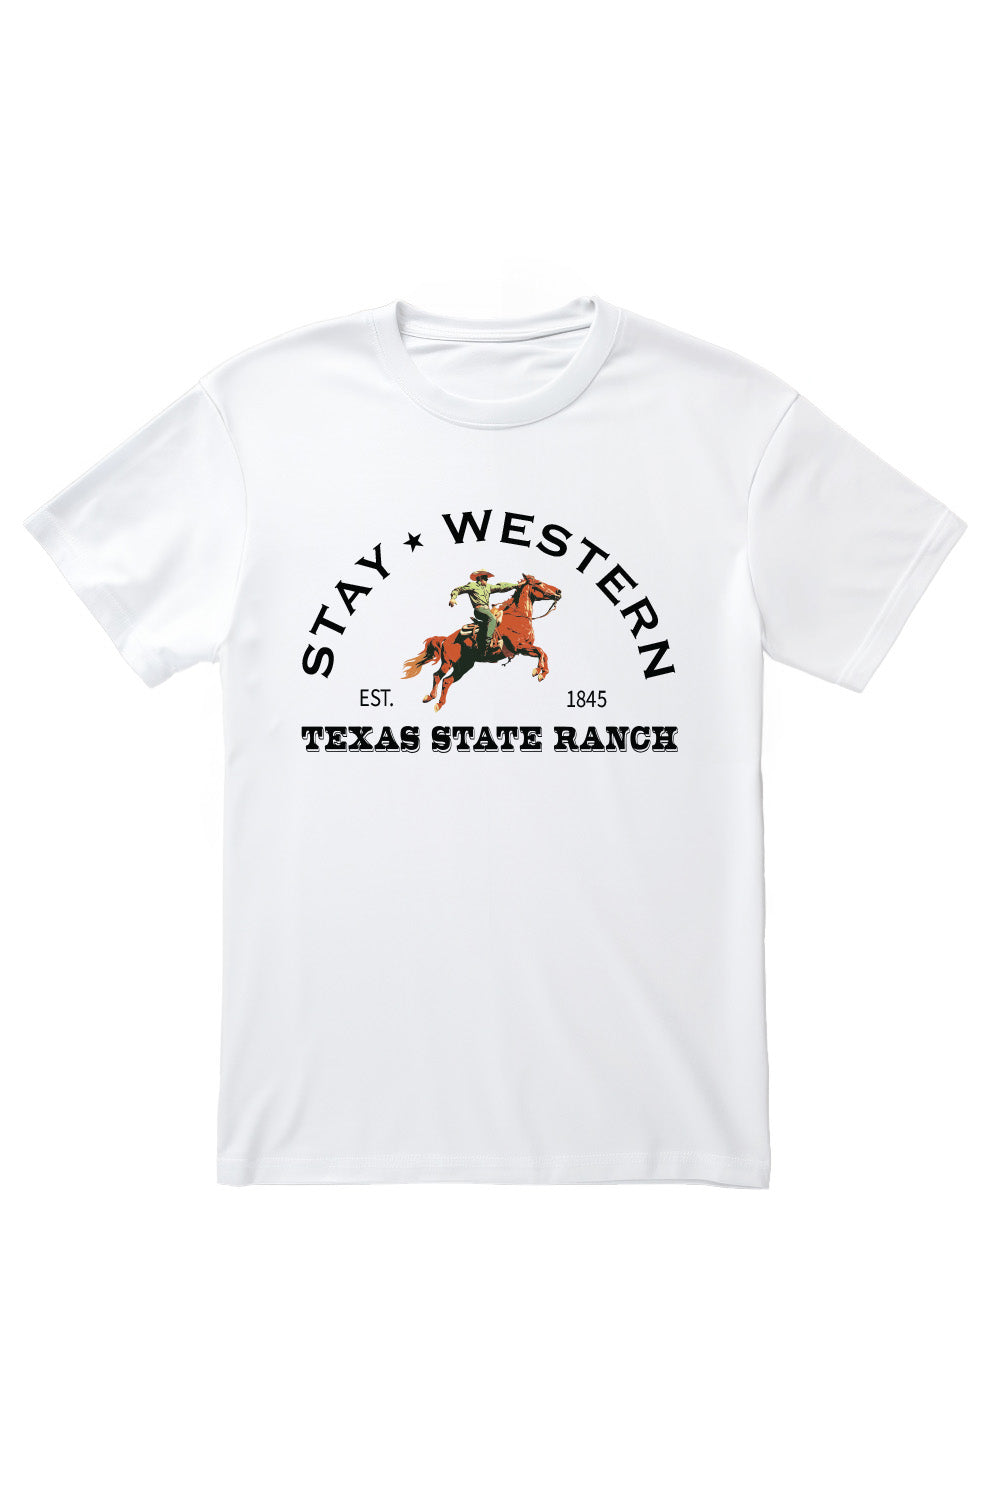 Stay Western T-Shirt in White (Custom Packs)